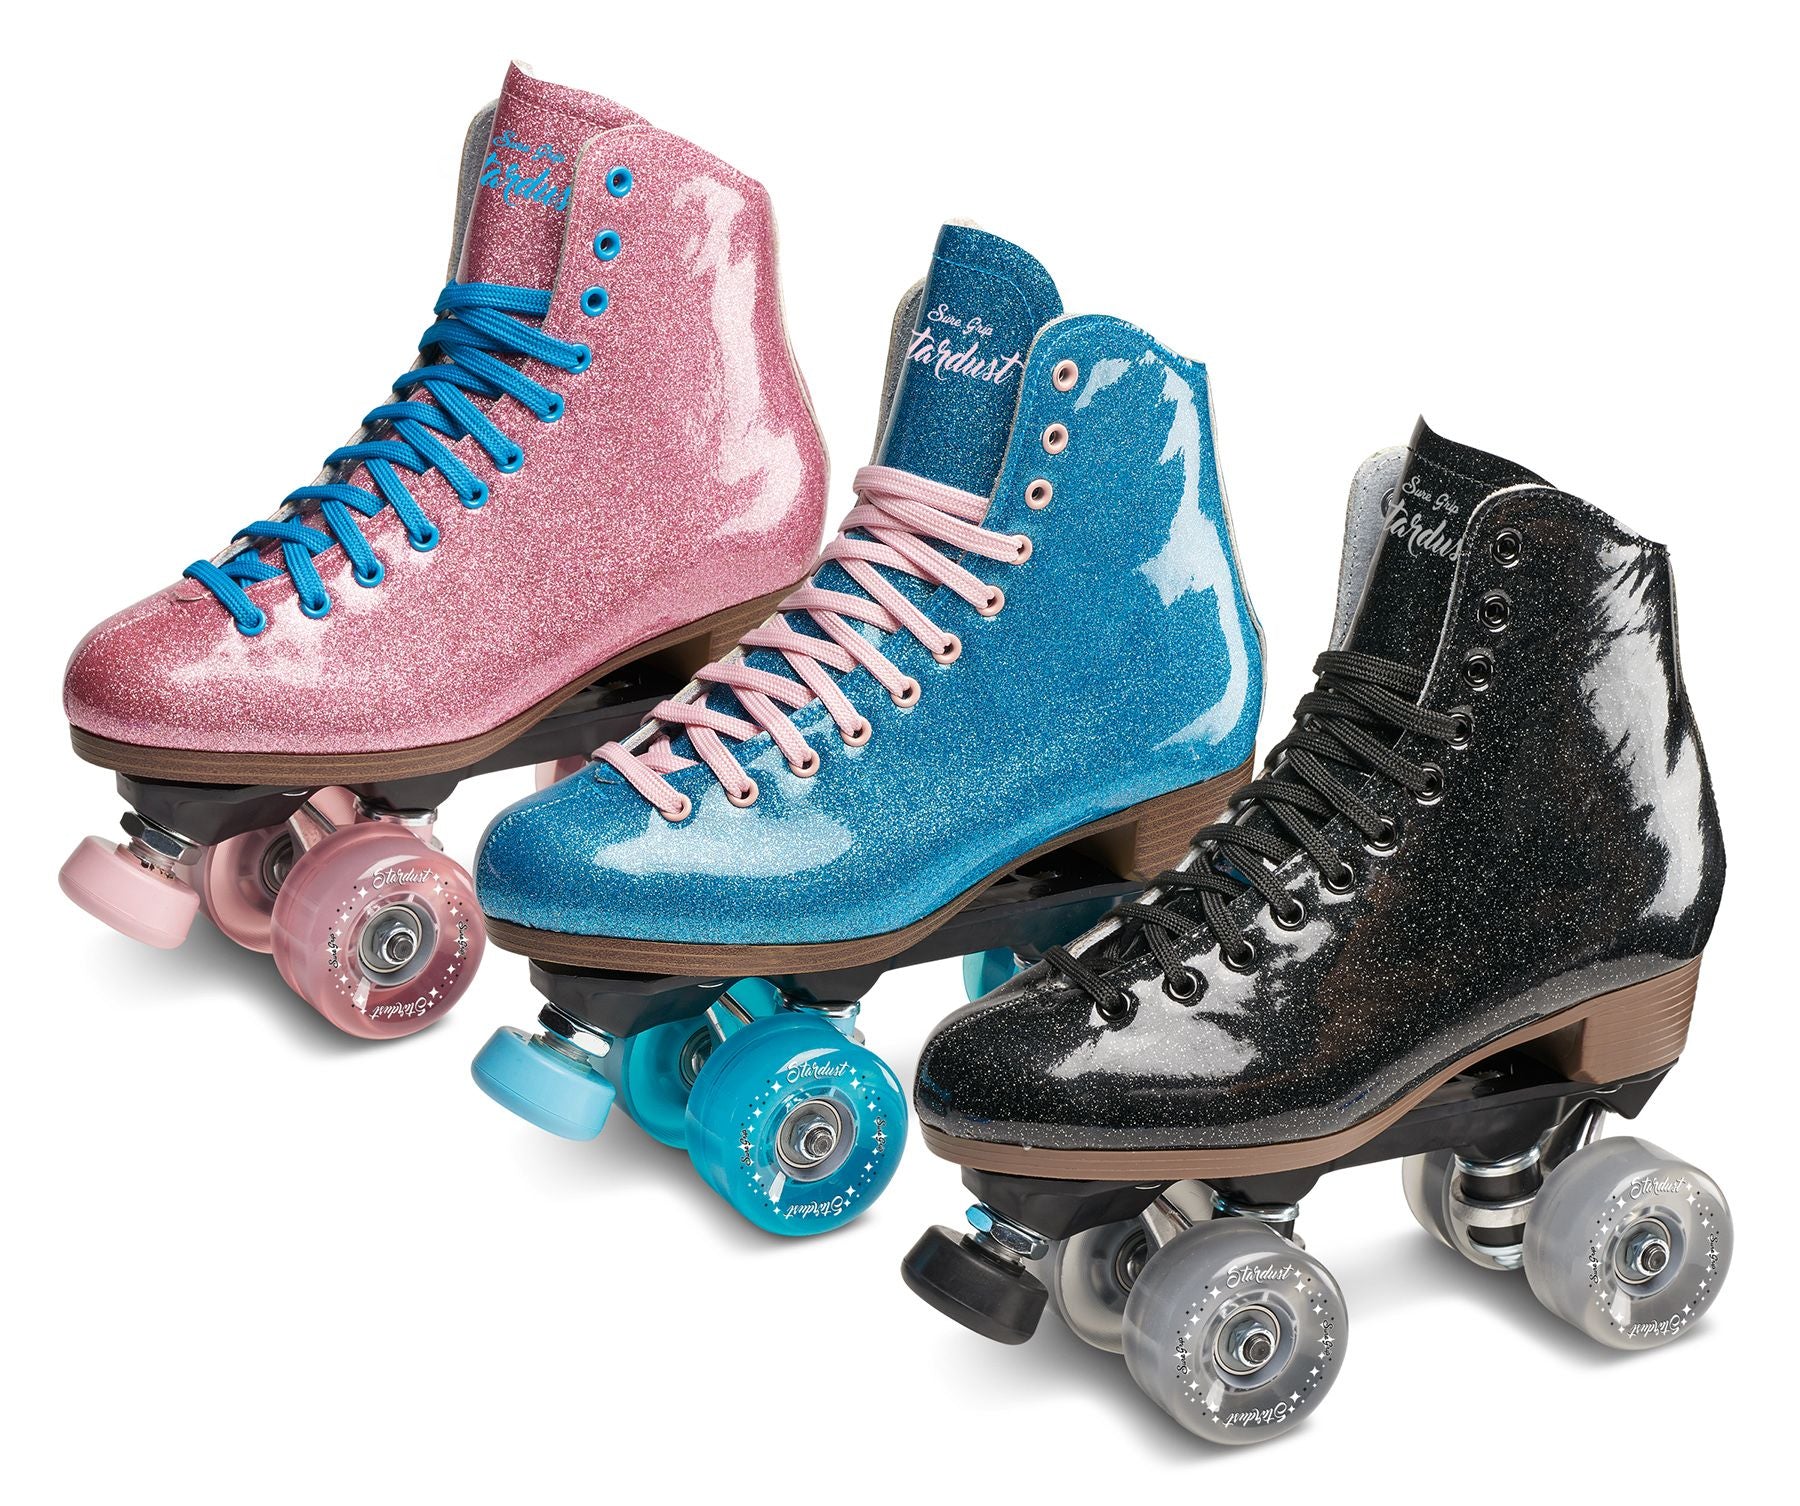 Suregrip Blue Glitter Stardust Quad Skates - Momma Trucker Skates